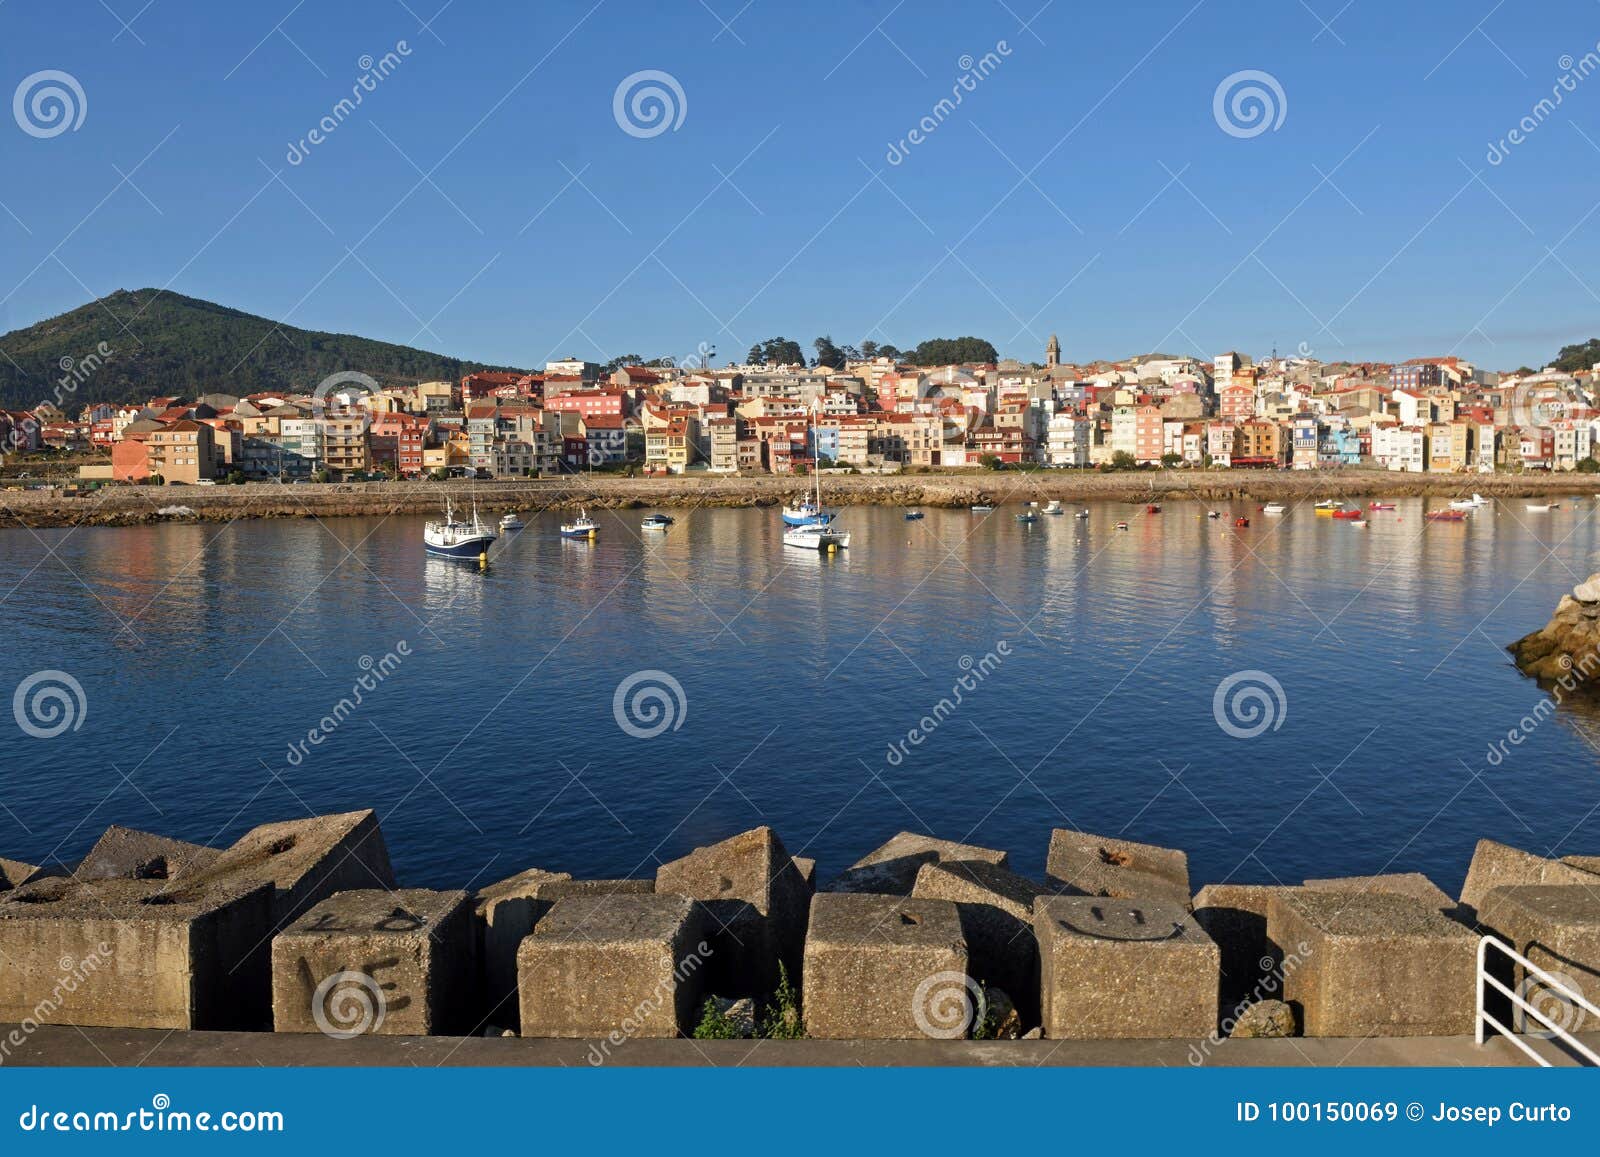 view of the fishing village of la guardia, pontevedra province,